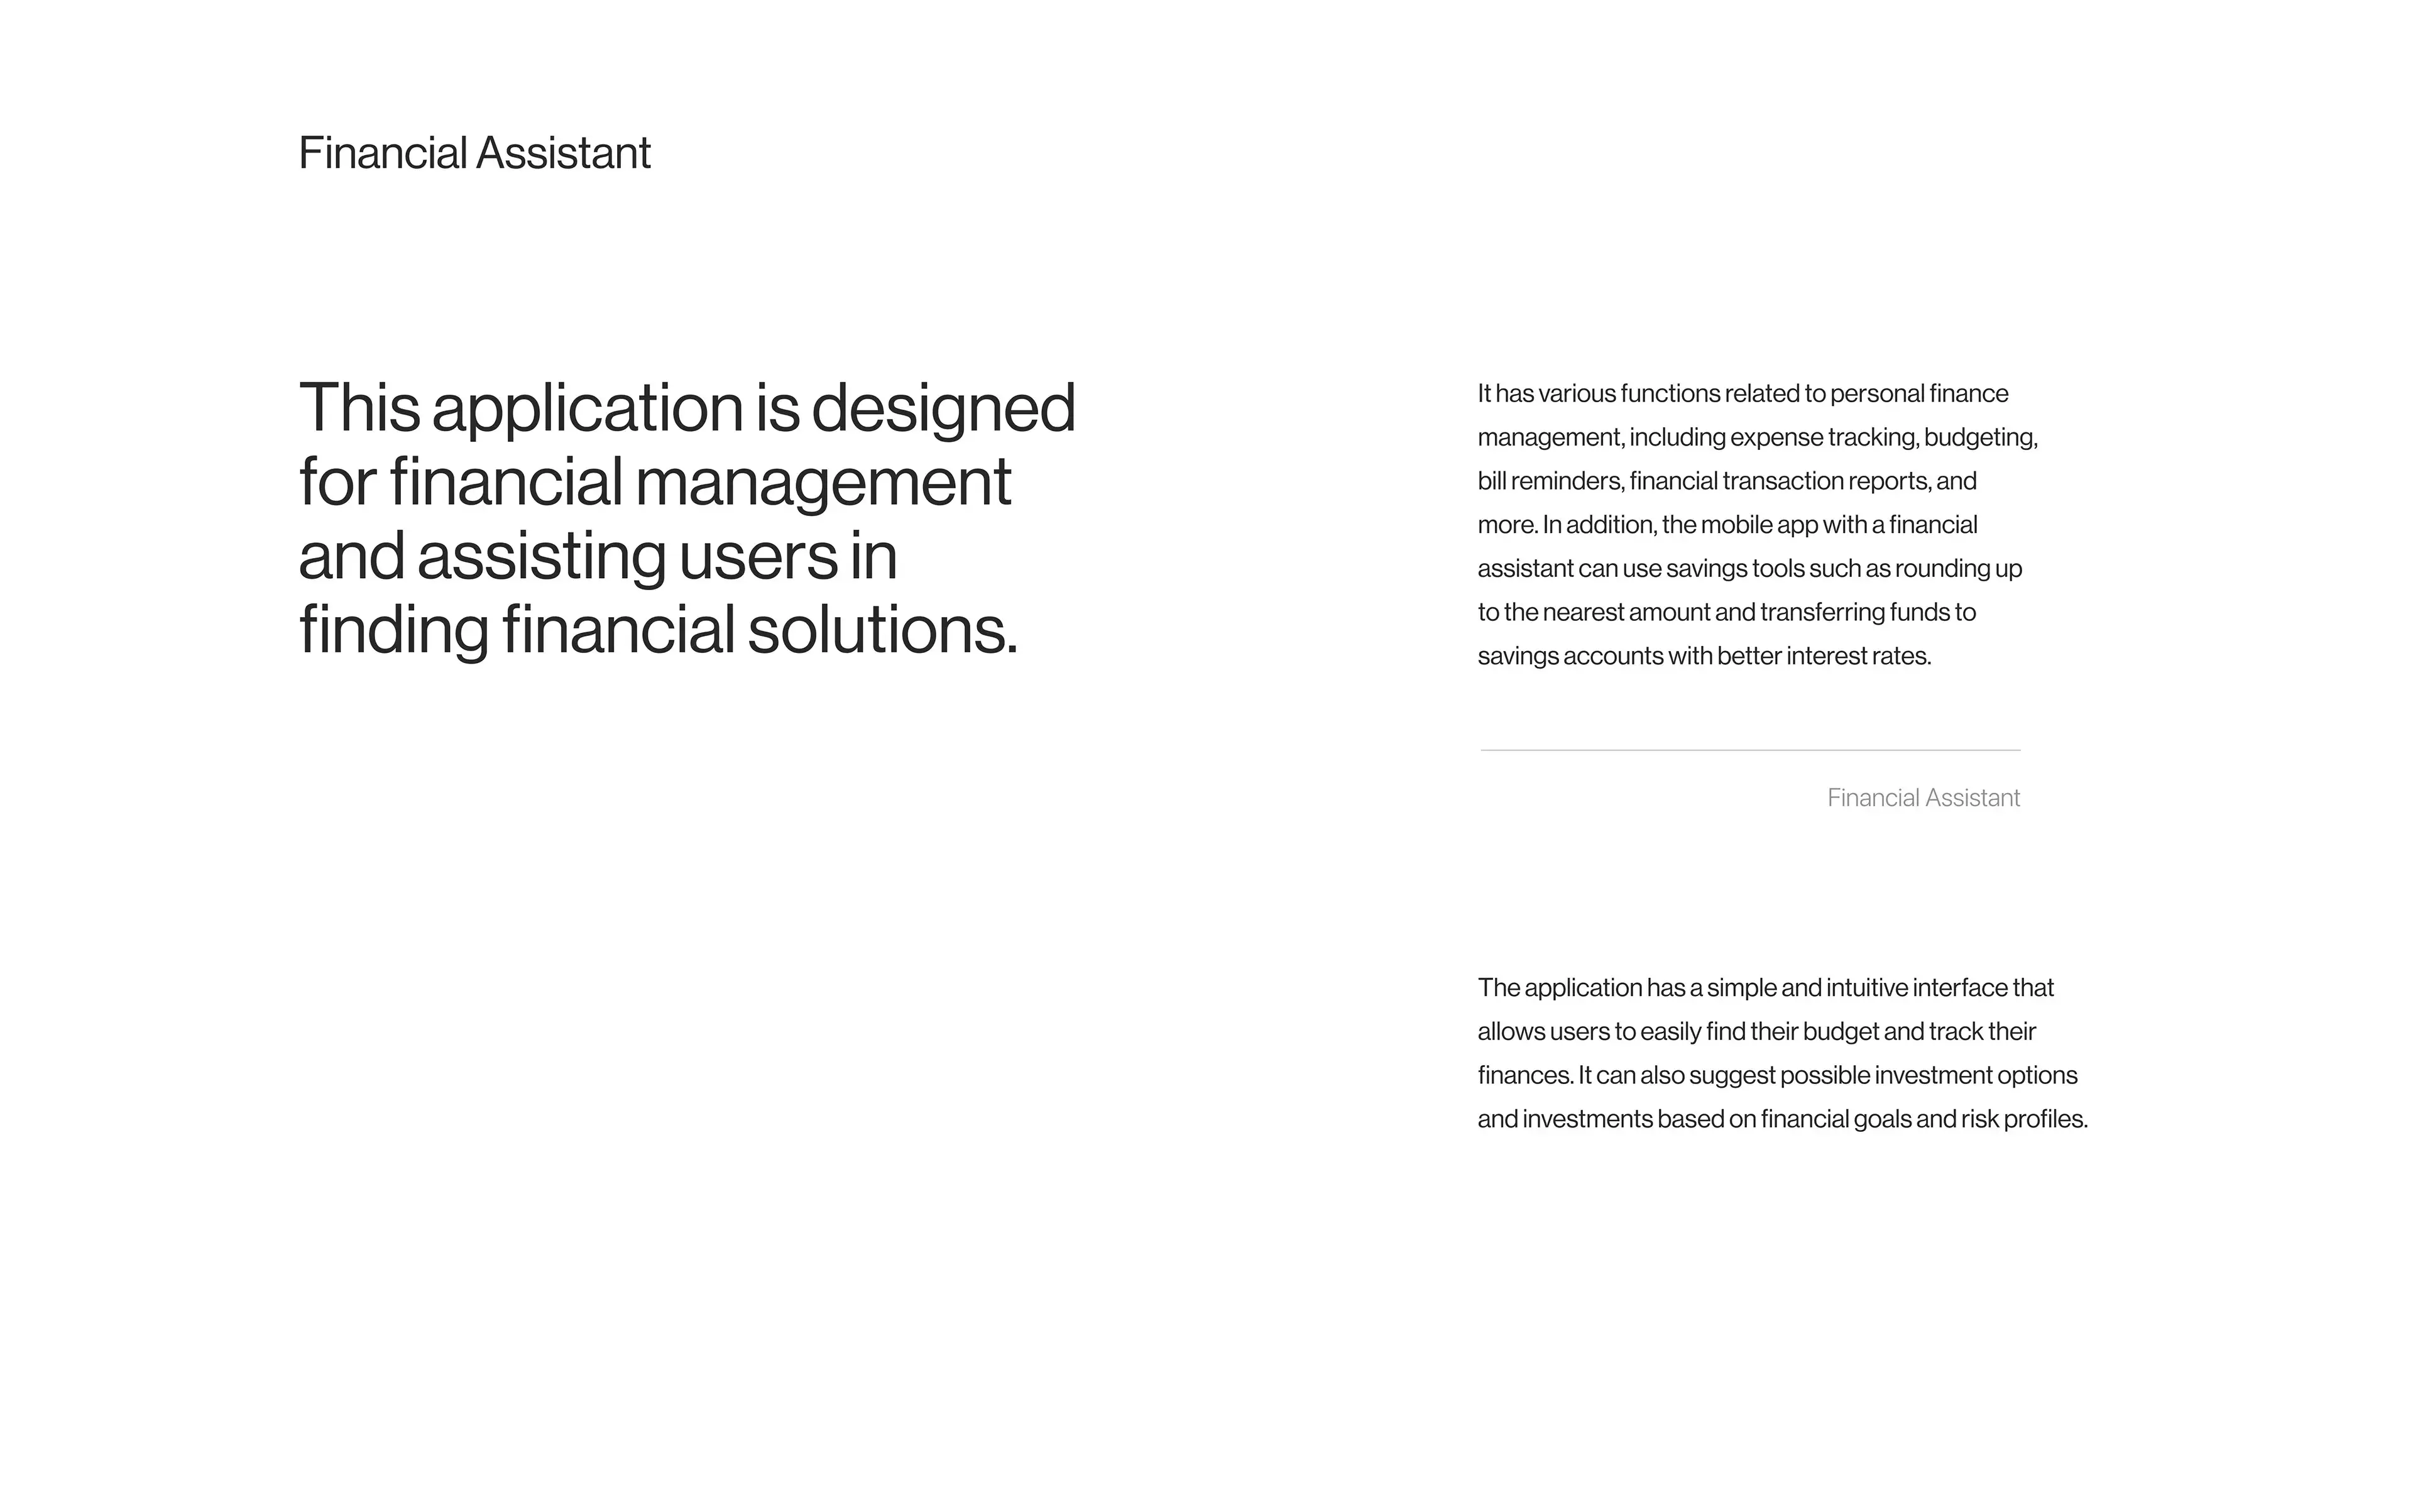 FinAssist - Personal Finance Assistant